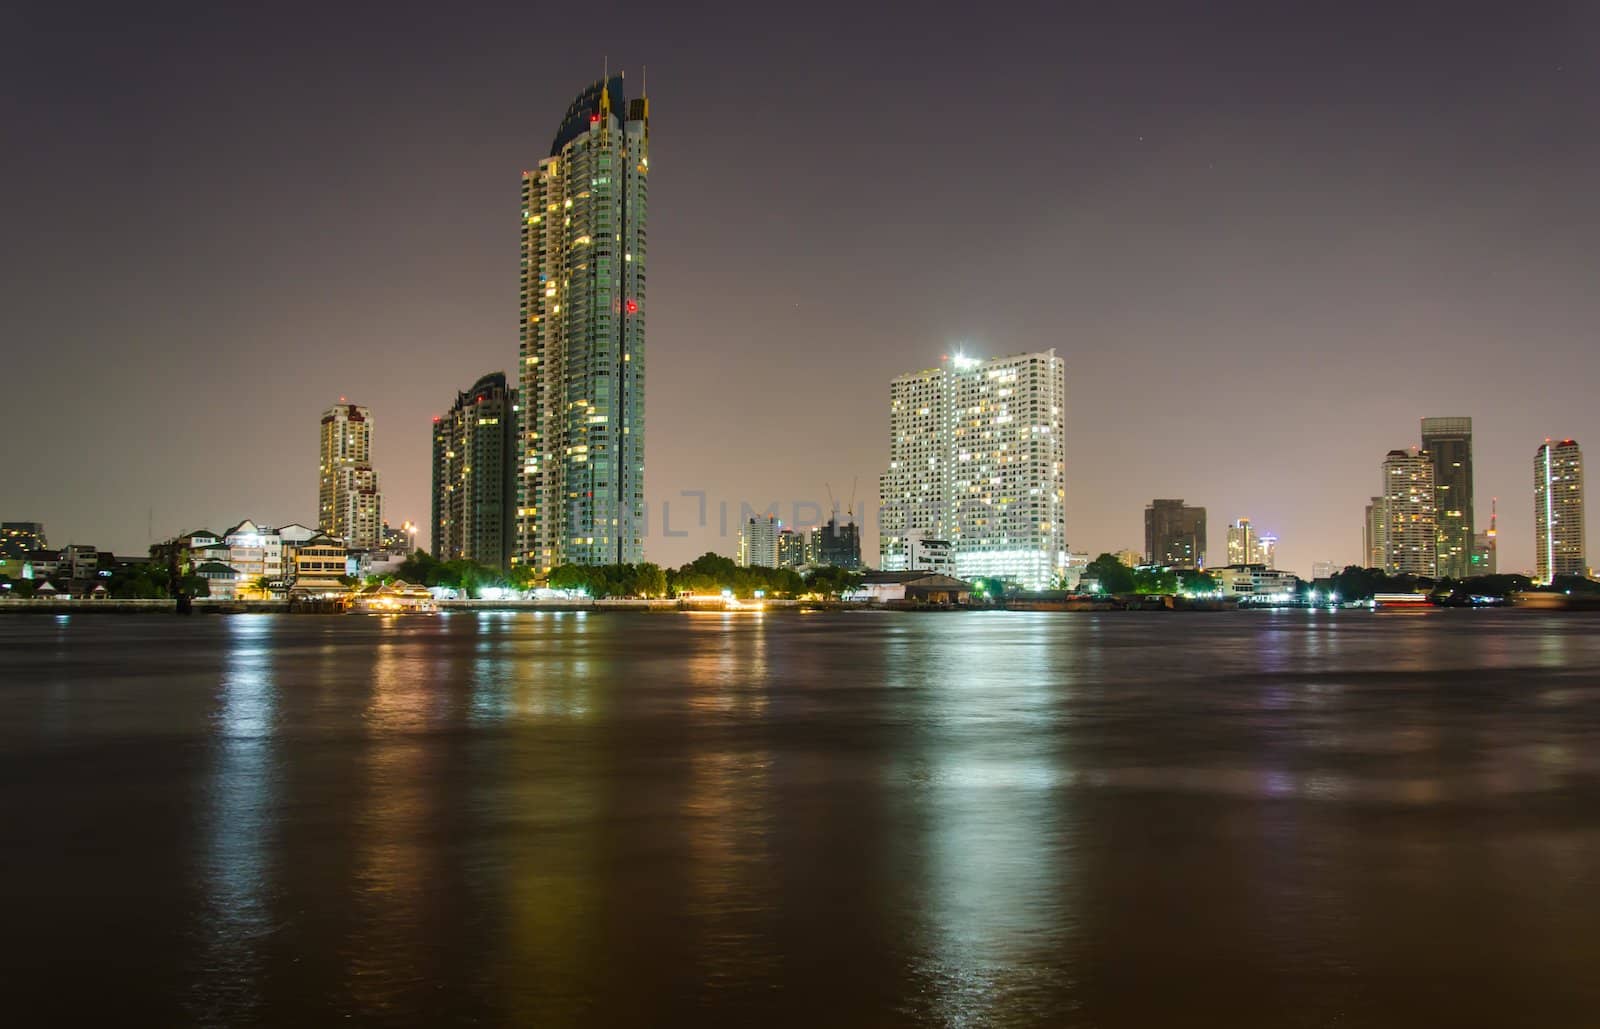 Riverside buildings at night in Bangkok, Thailand.